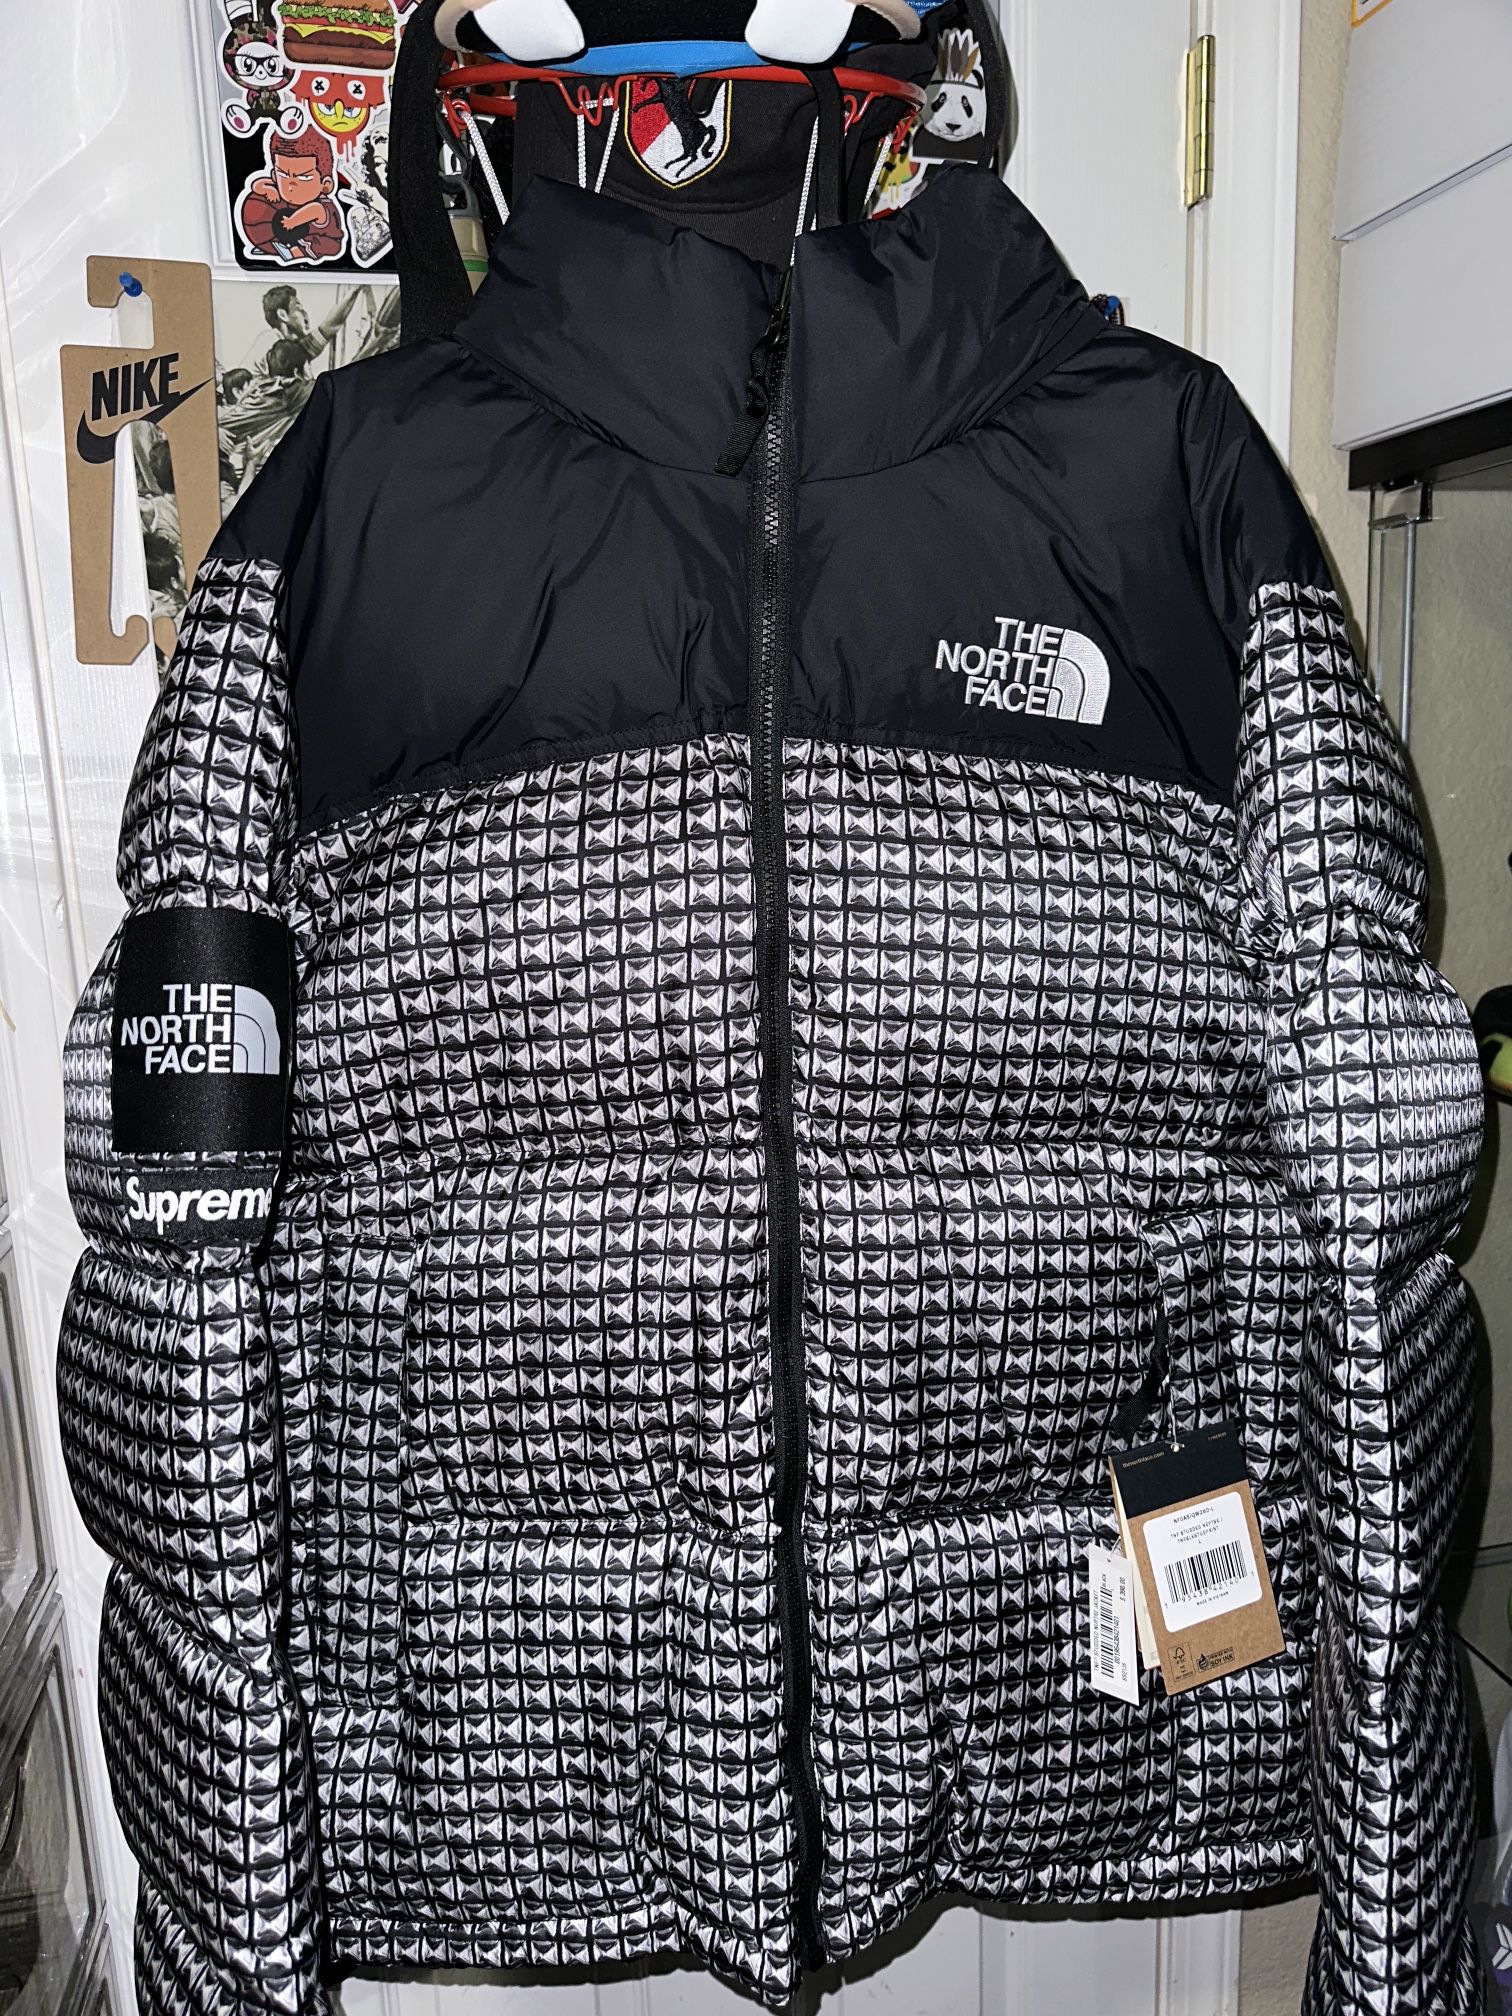 Supreme The North Face Studded Nuptse Jacket for Sale in Elk